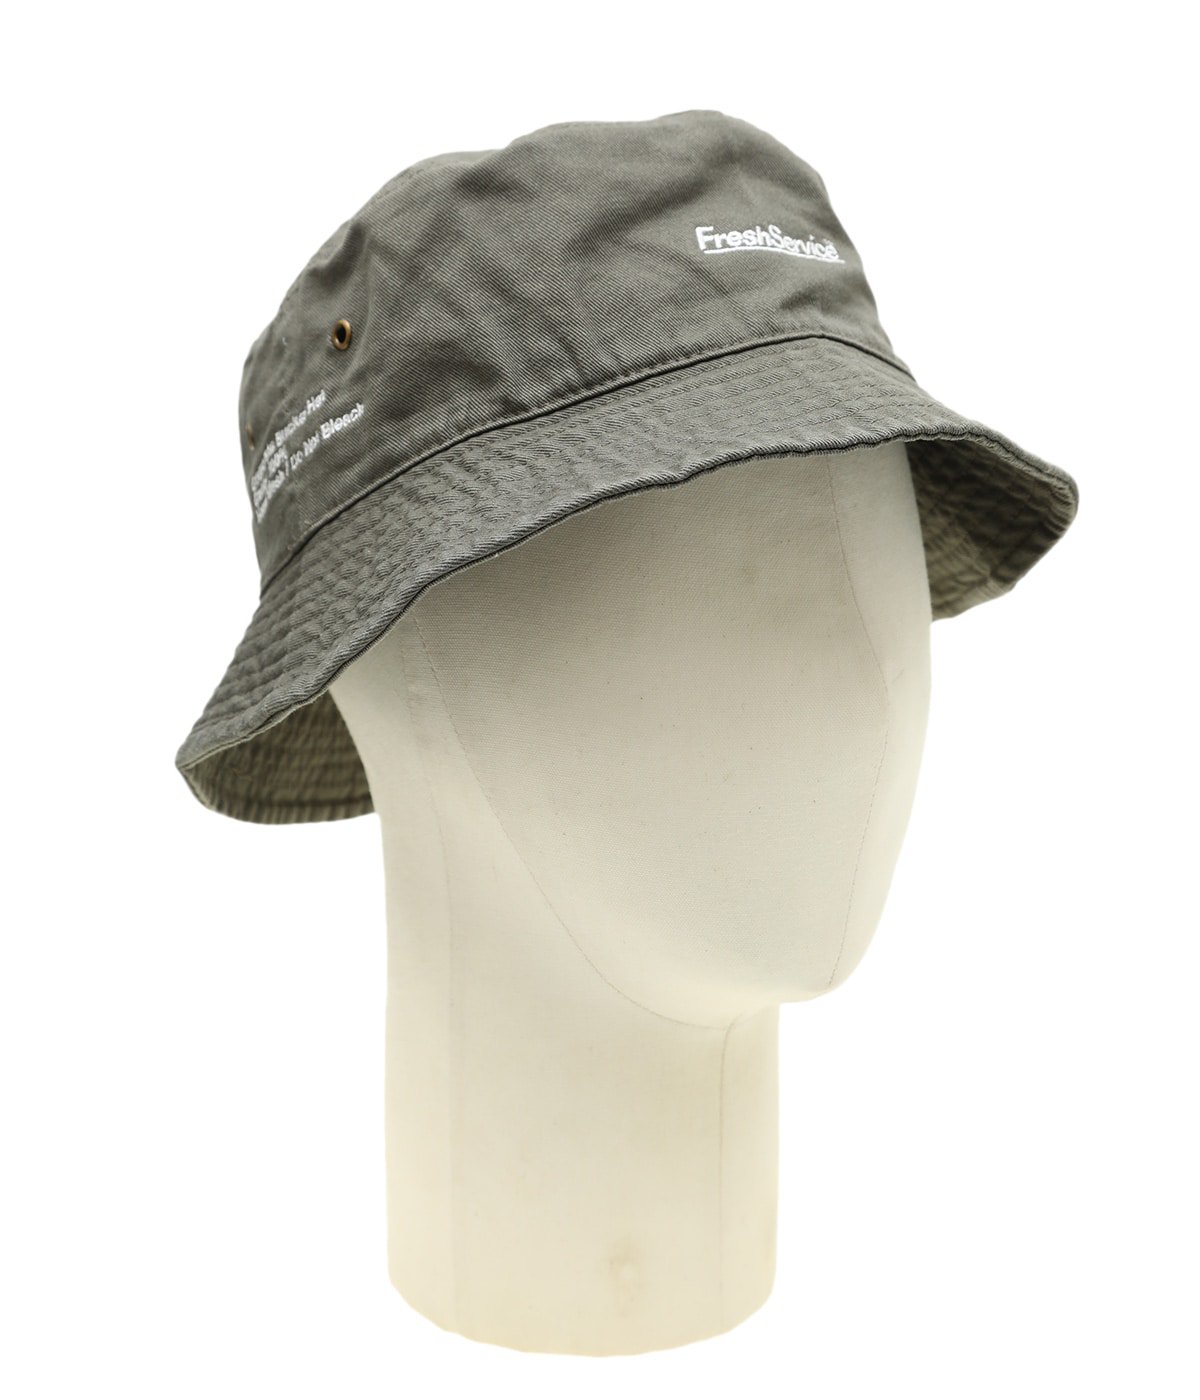 CORPORATE BUCKET HAT | FreshService(フレッシュサービス) / 帽子